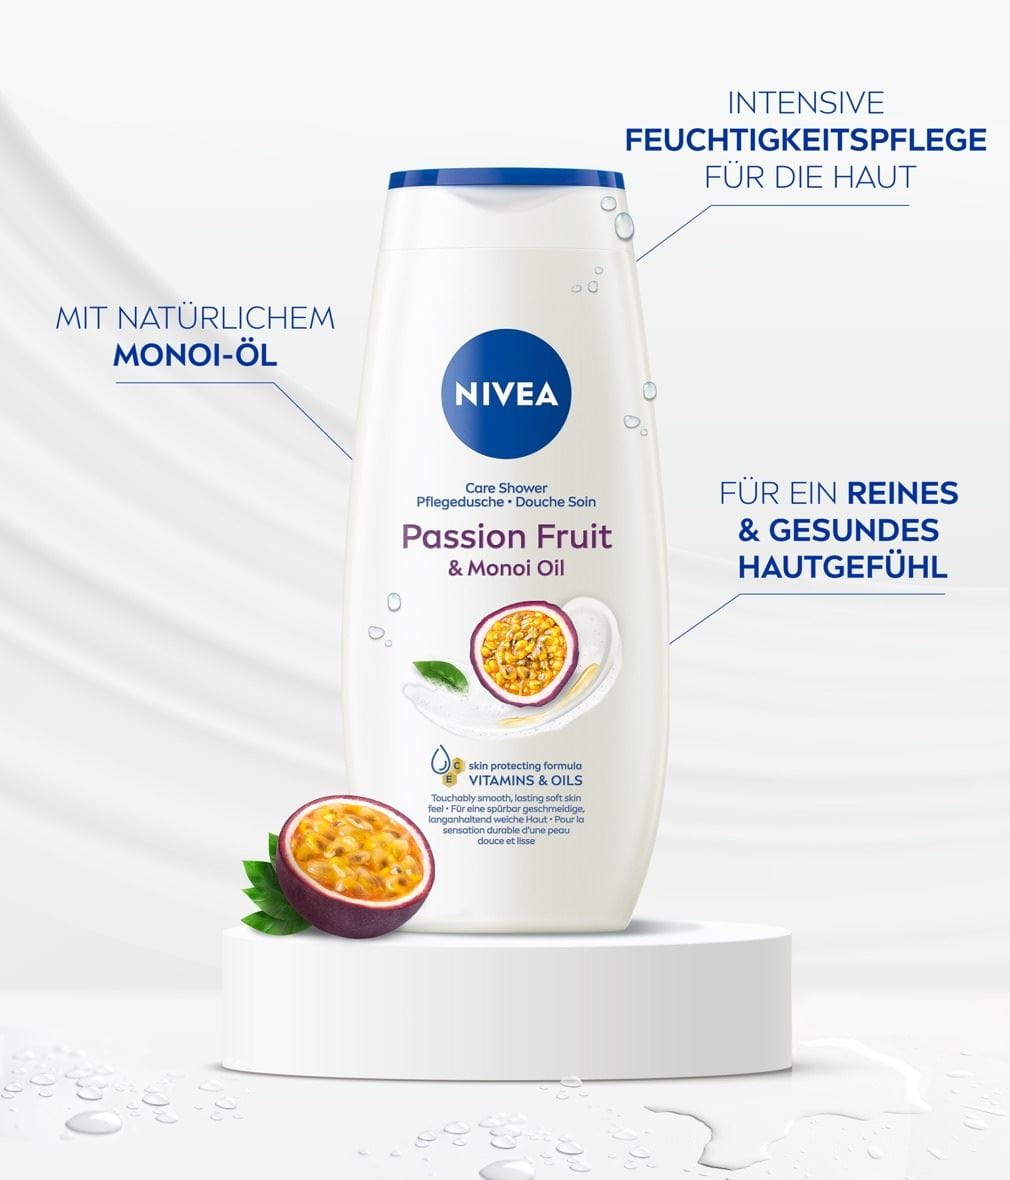 NIVEA Pflegedusche Passion Fruit Monoi Oil Produktabbildung mit Benefits